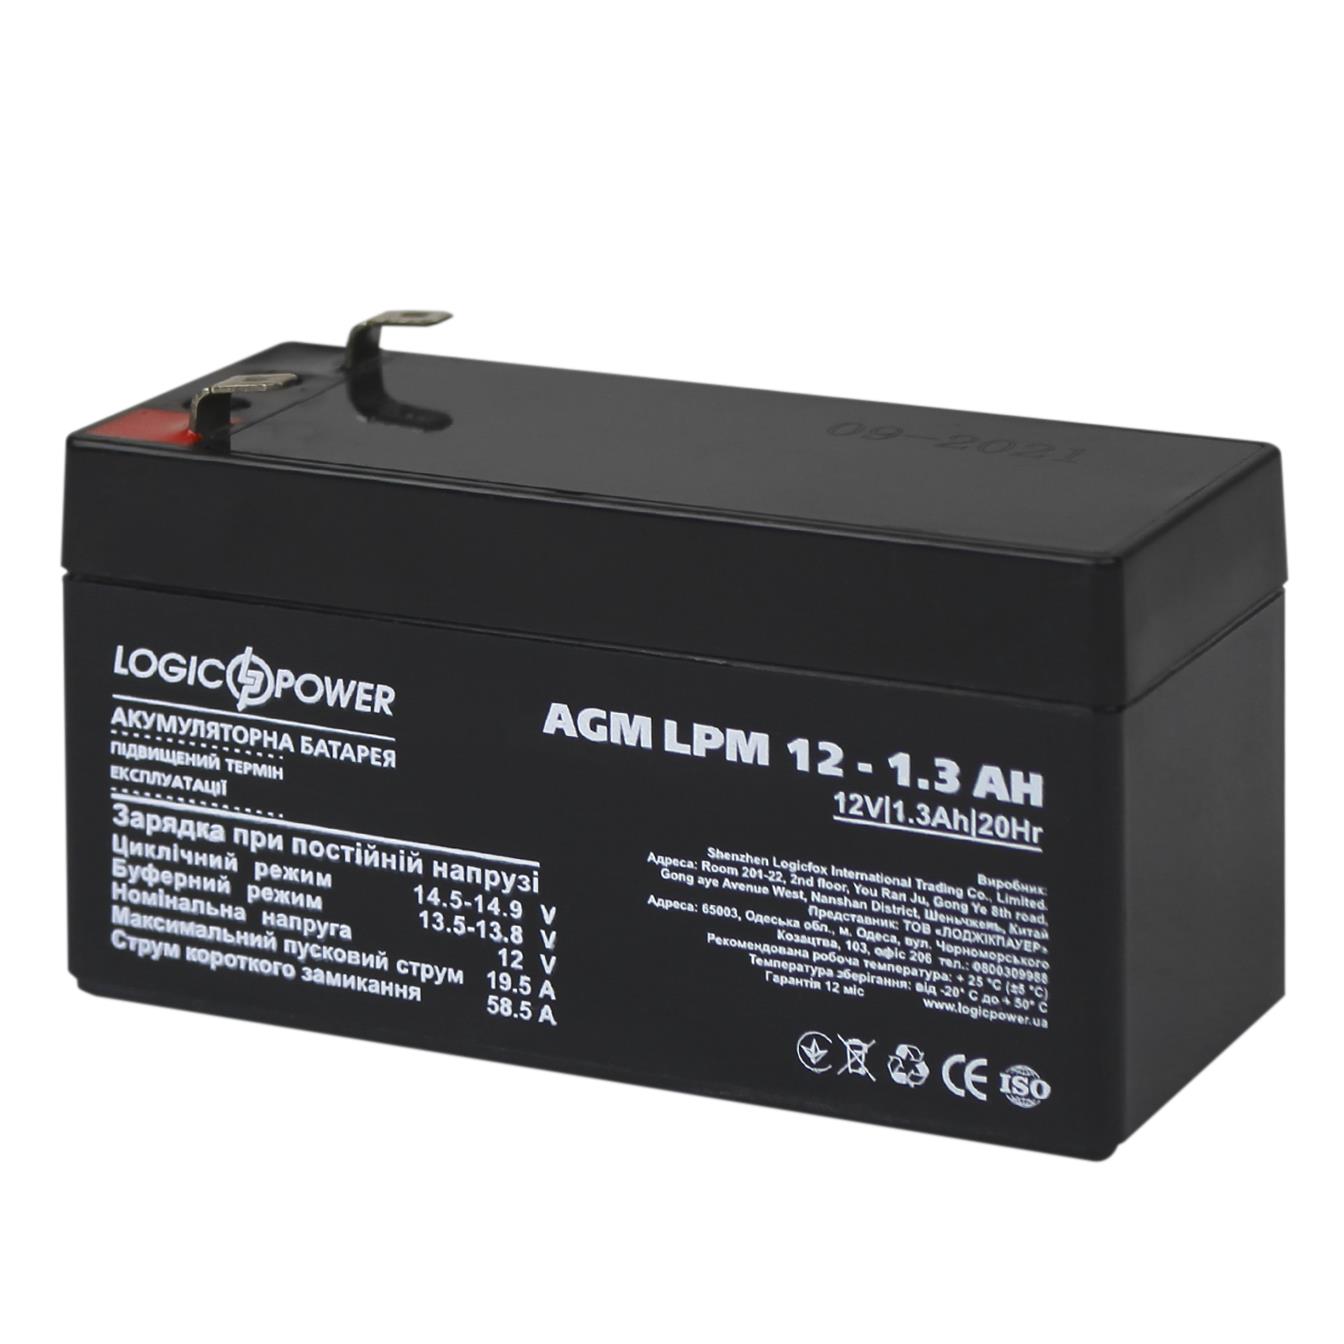 LogicPower AGM LPM 12V - 1.3 Ah (4131)